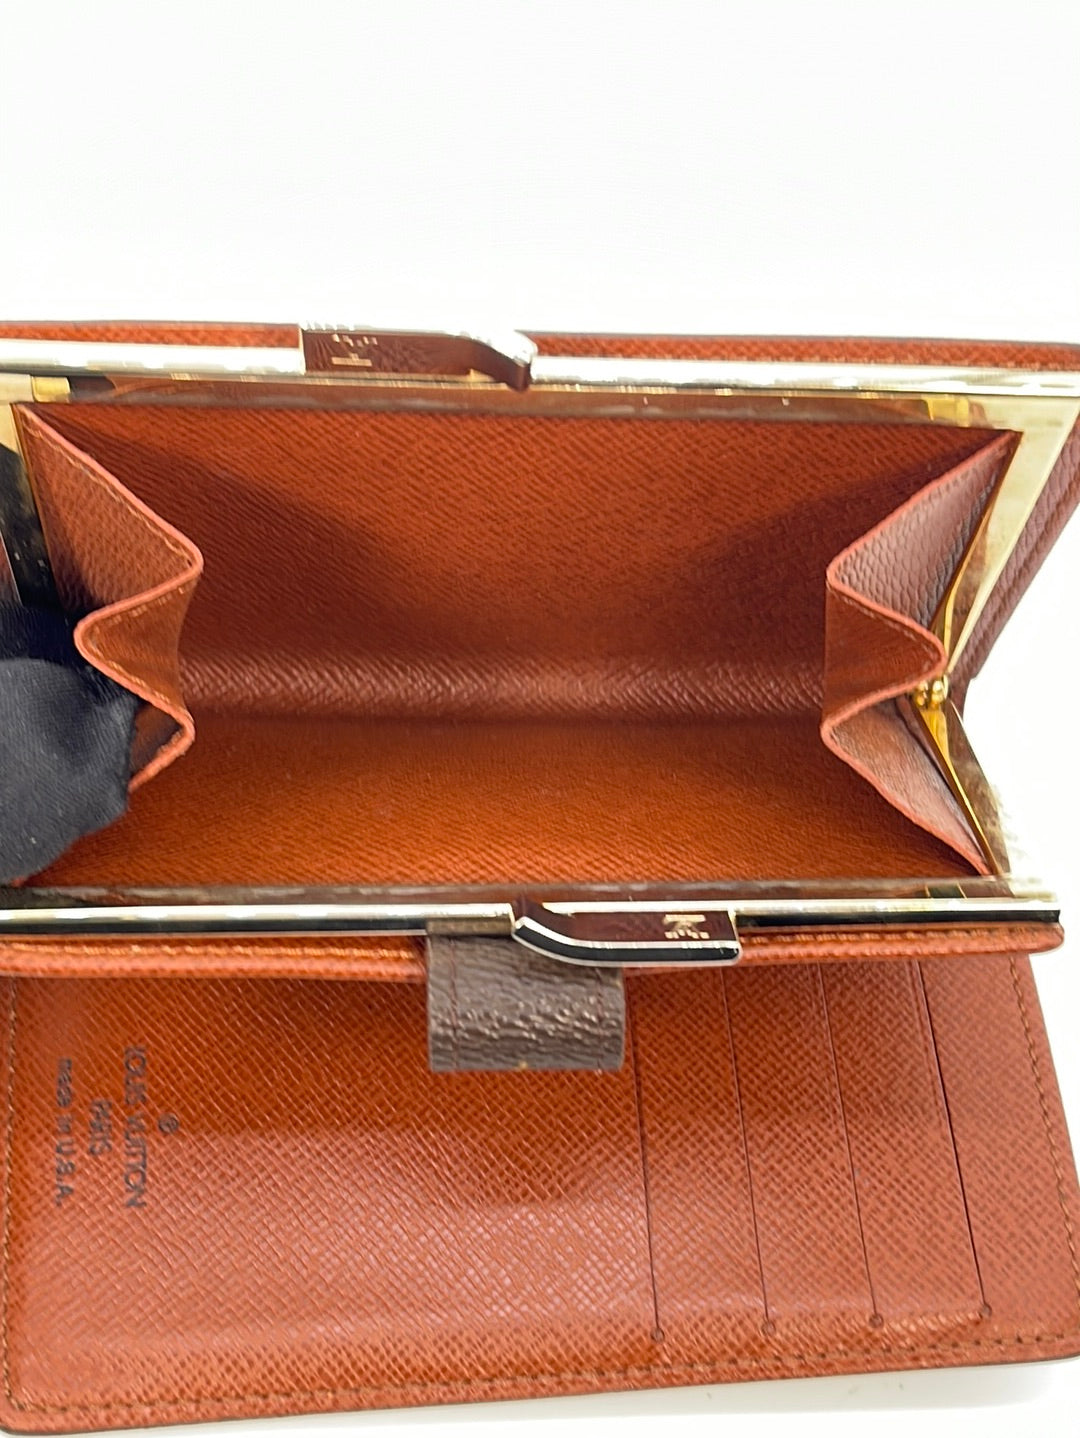 Louis Vuitton Medium French Wallet